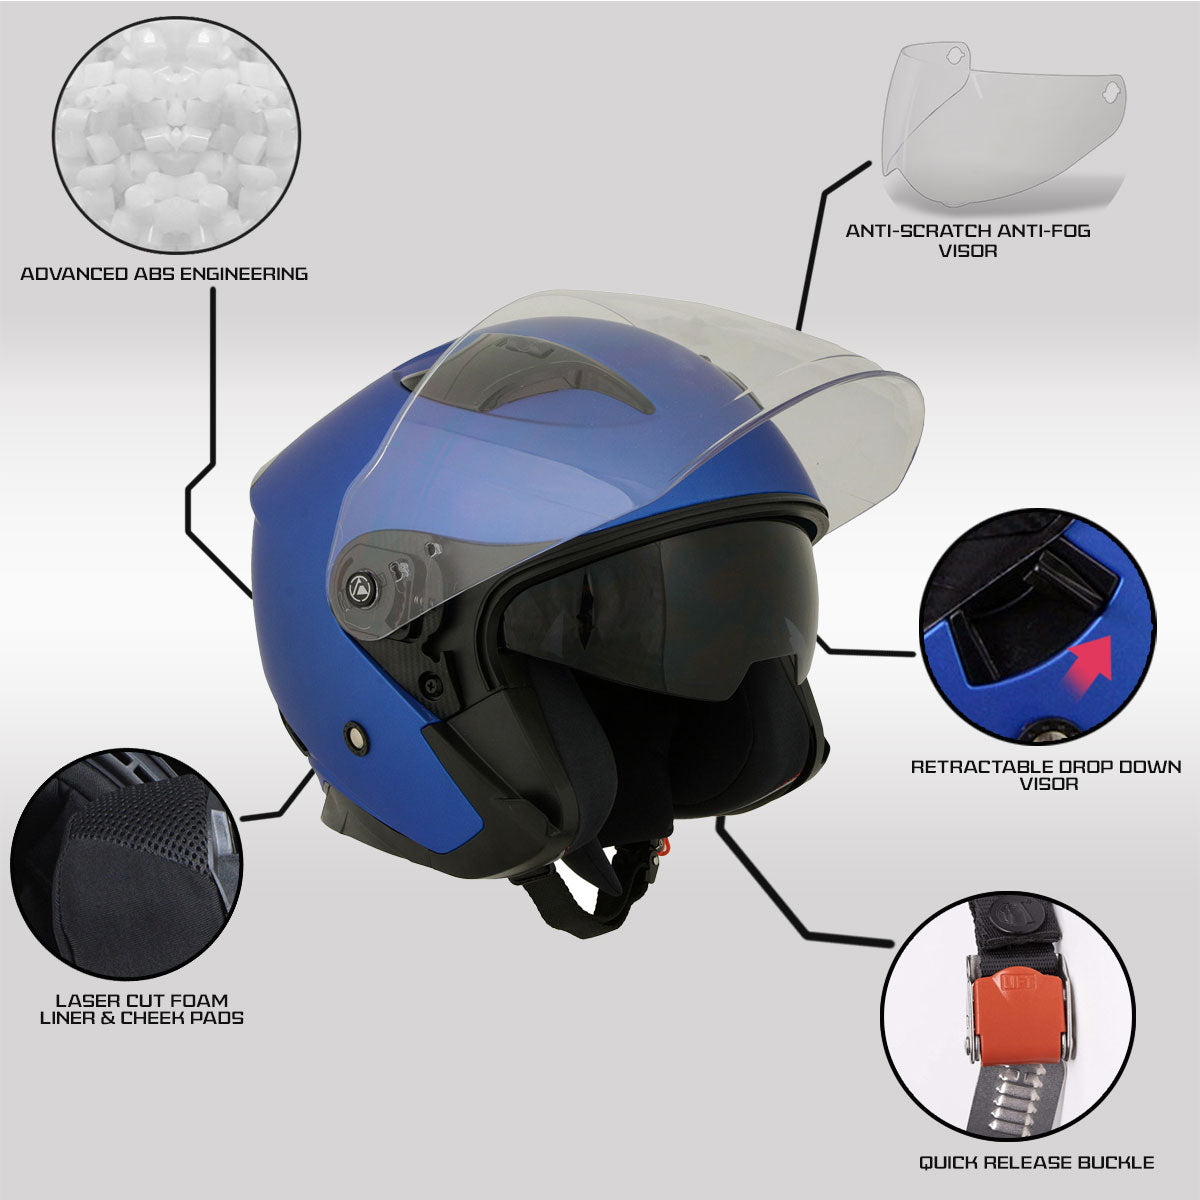 Milwaukee Helmets MPH9823DOT 'Shift' Open Face 3/4 Blue Helmet for Men and Women Biker with Drop Down Tinted Visor